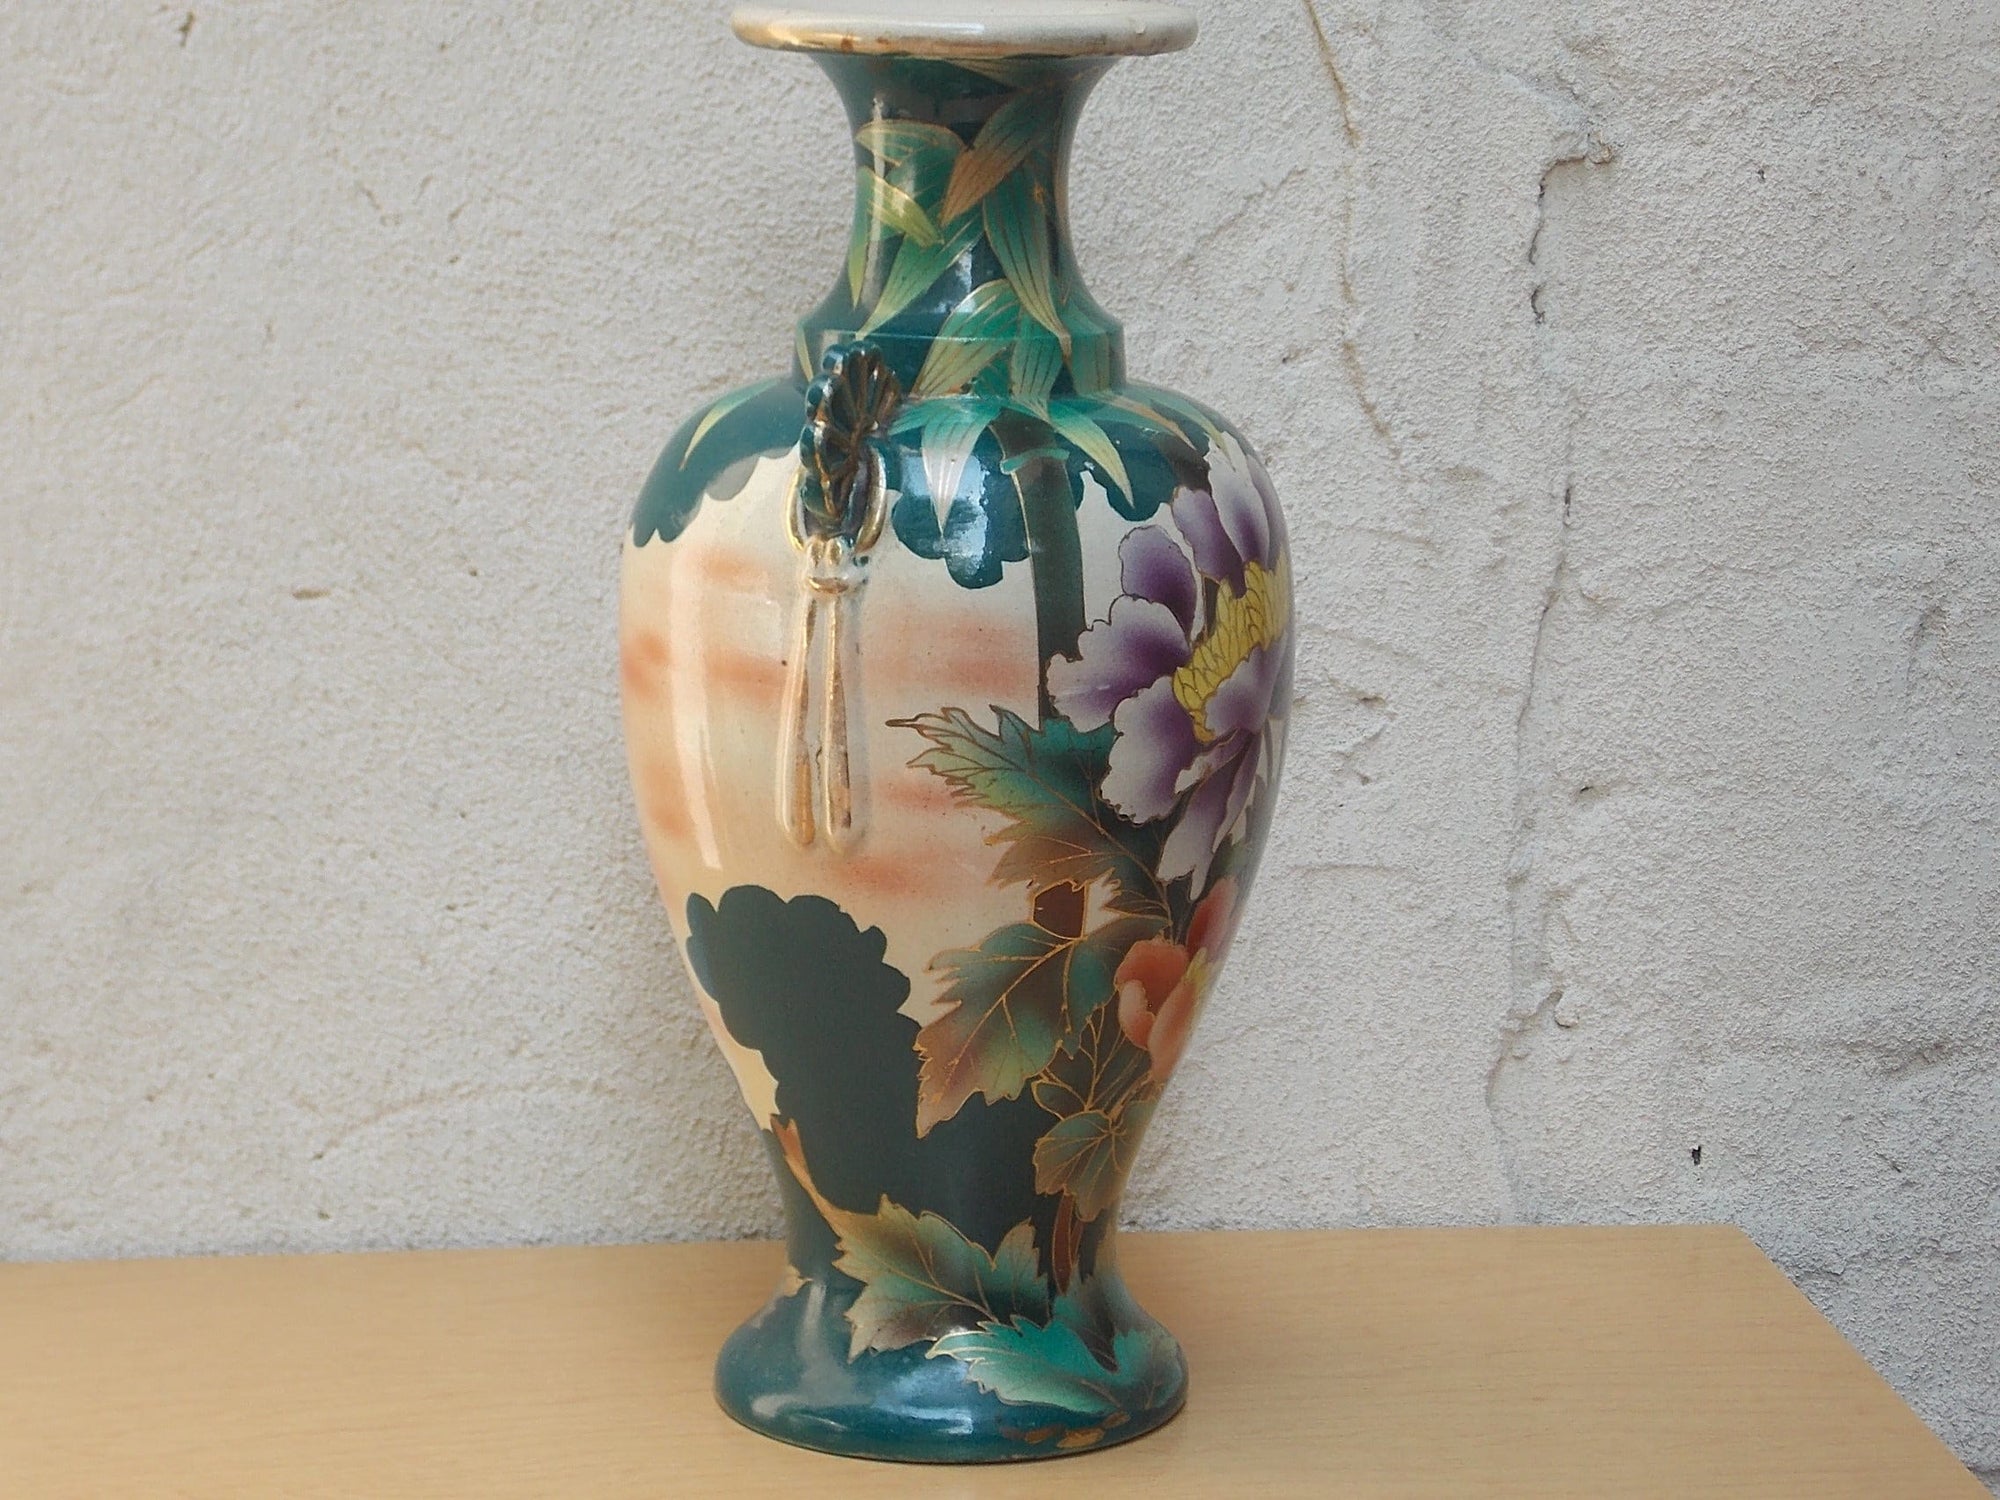 https://cdn.shopify.com/s/files/1/0268/0005/files/i-like-mike-s-mid-century-modern-wall-decor-art-large-green-white-floral-gilded-urn-vase-with-pink-purple-orange-11840338821208_2000x.JPG?v=1690461186